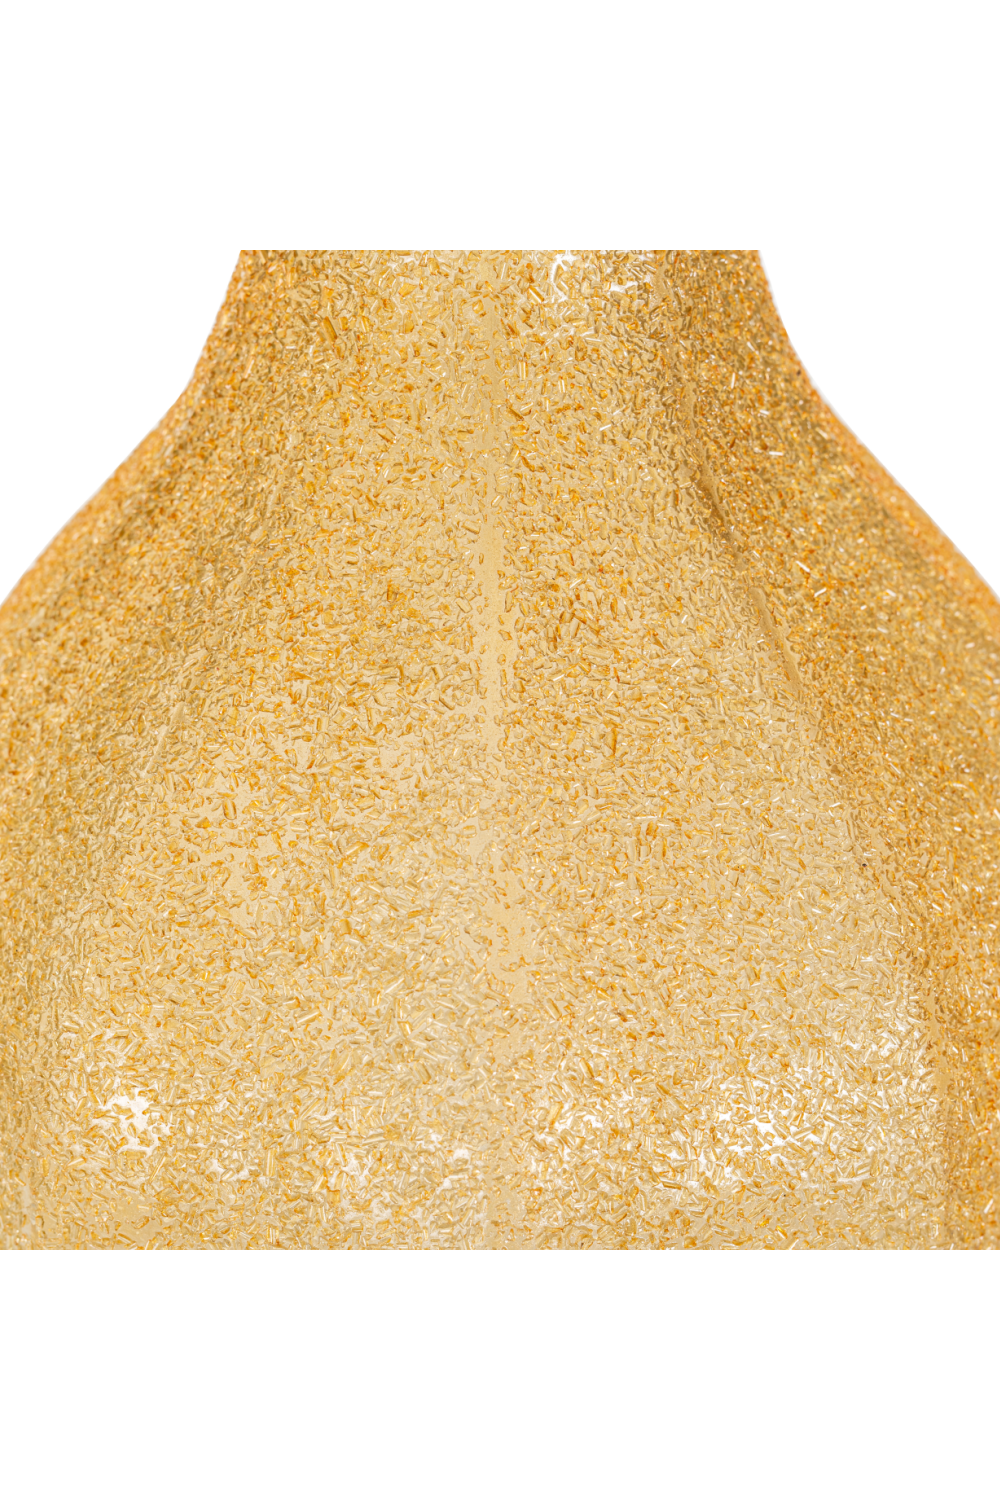 Gold Glass Bottle Vase S | OROA Cilou | OROA.com